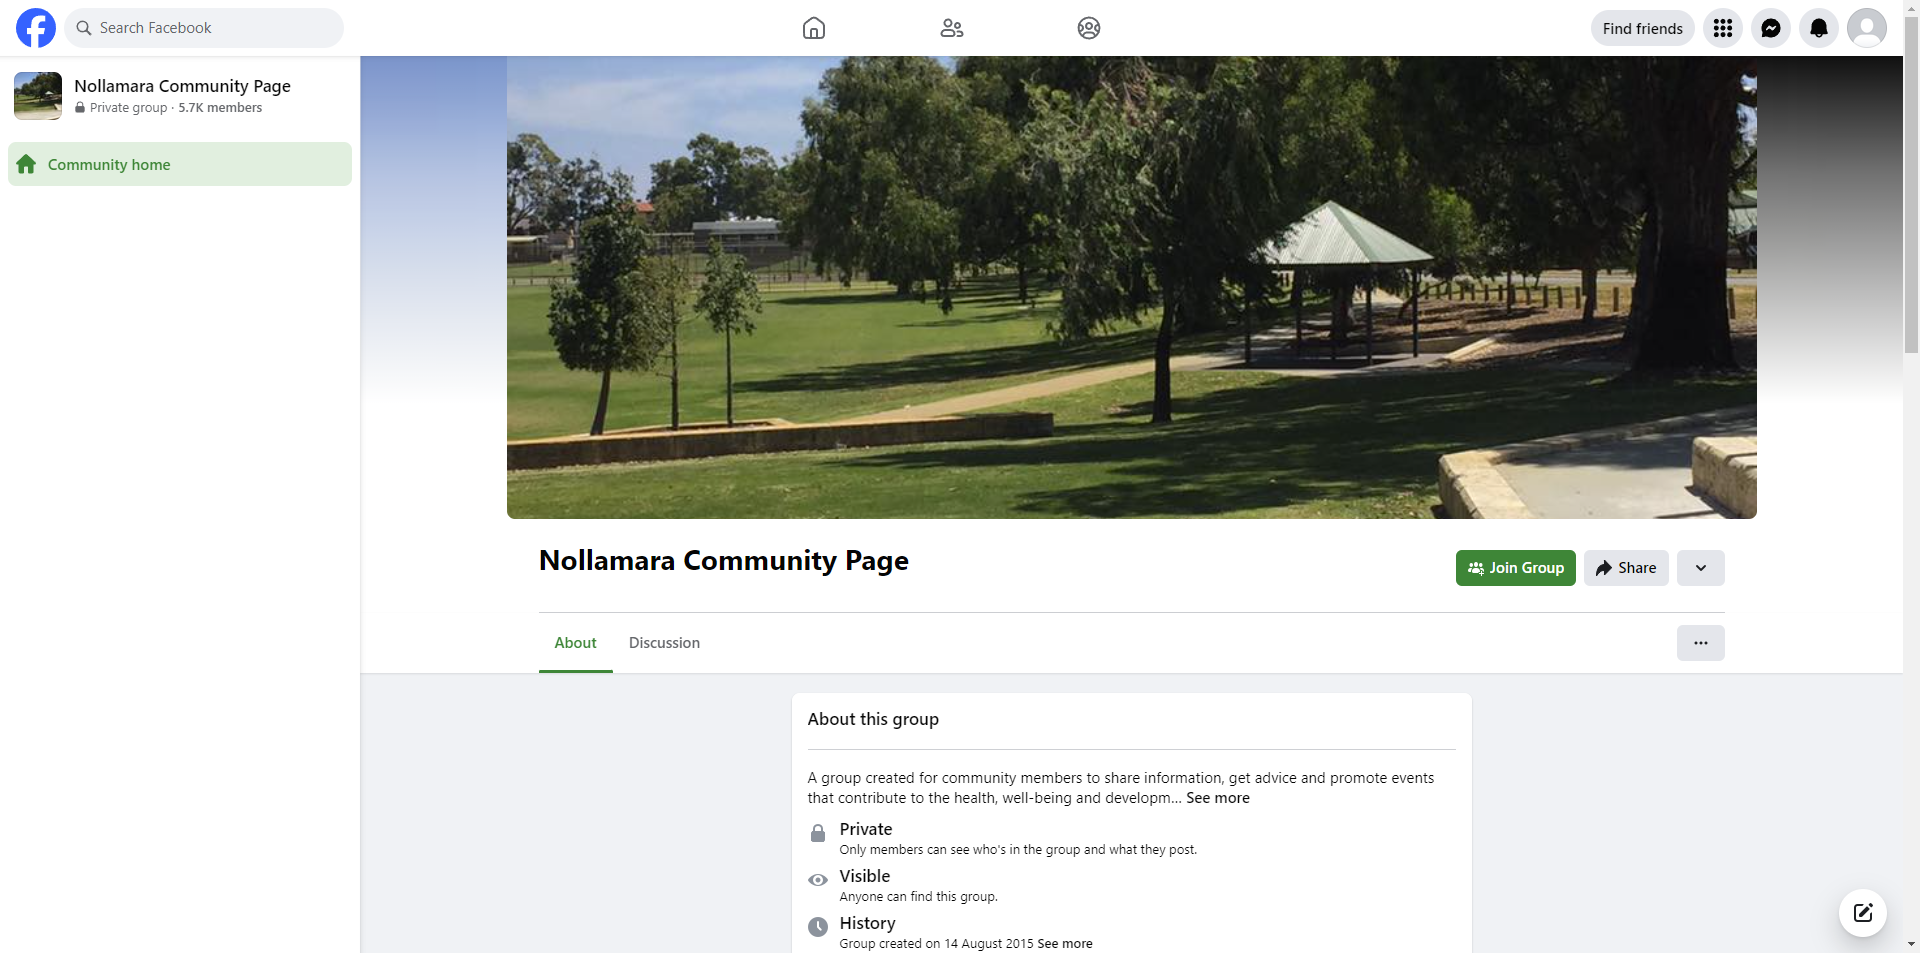 Nollamara Community Page